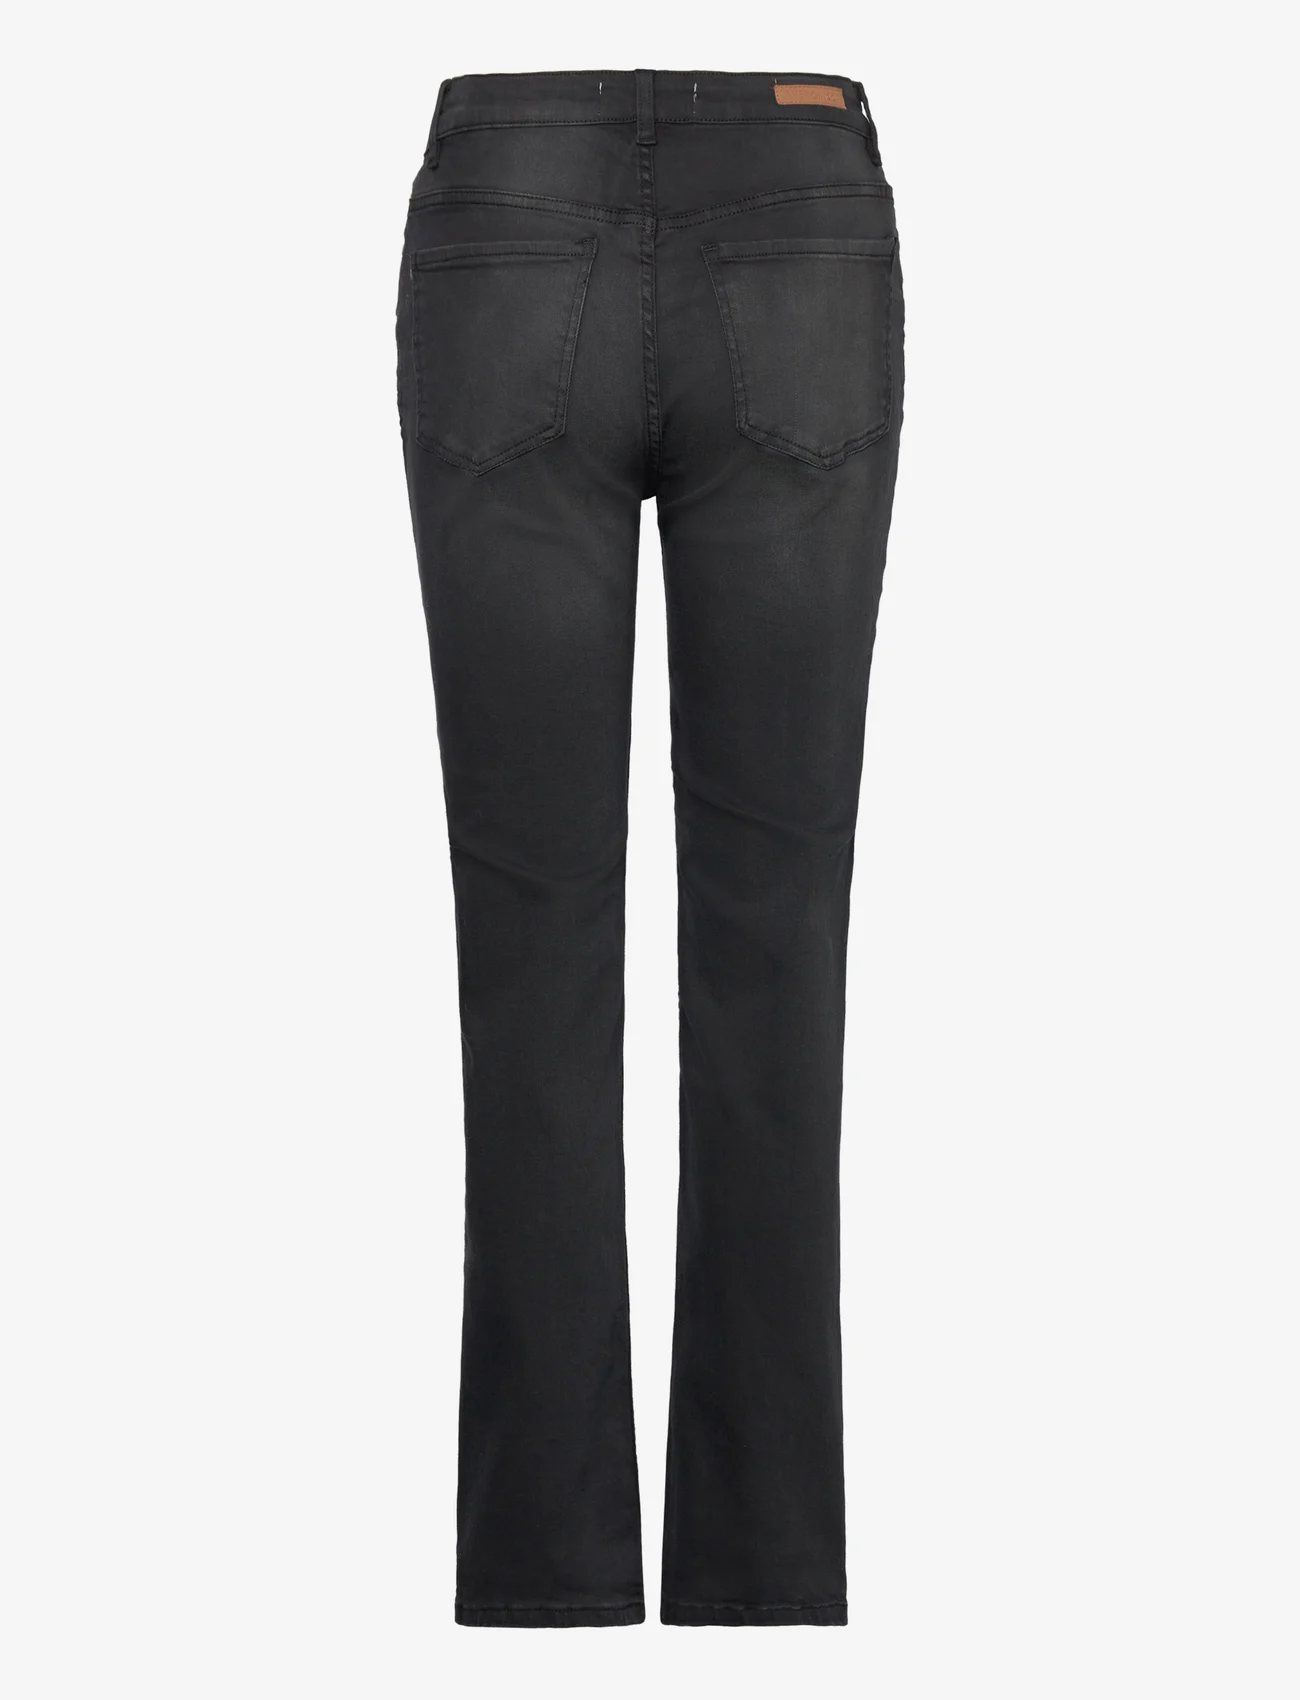 Sofie Schnoor - Jeans - flared jeans - black - 1